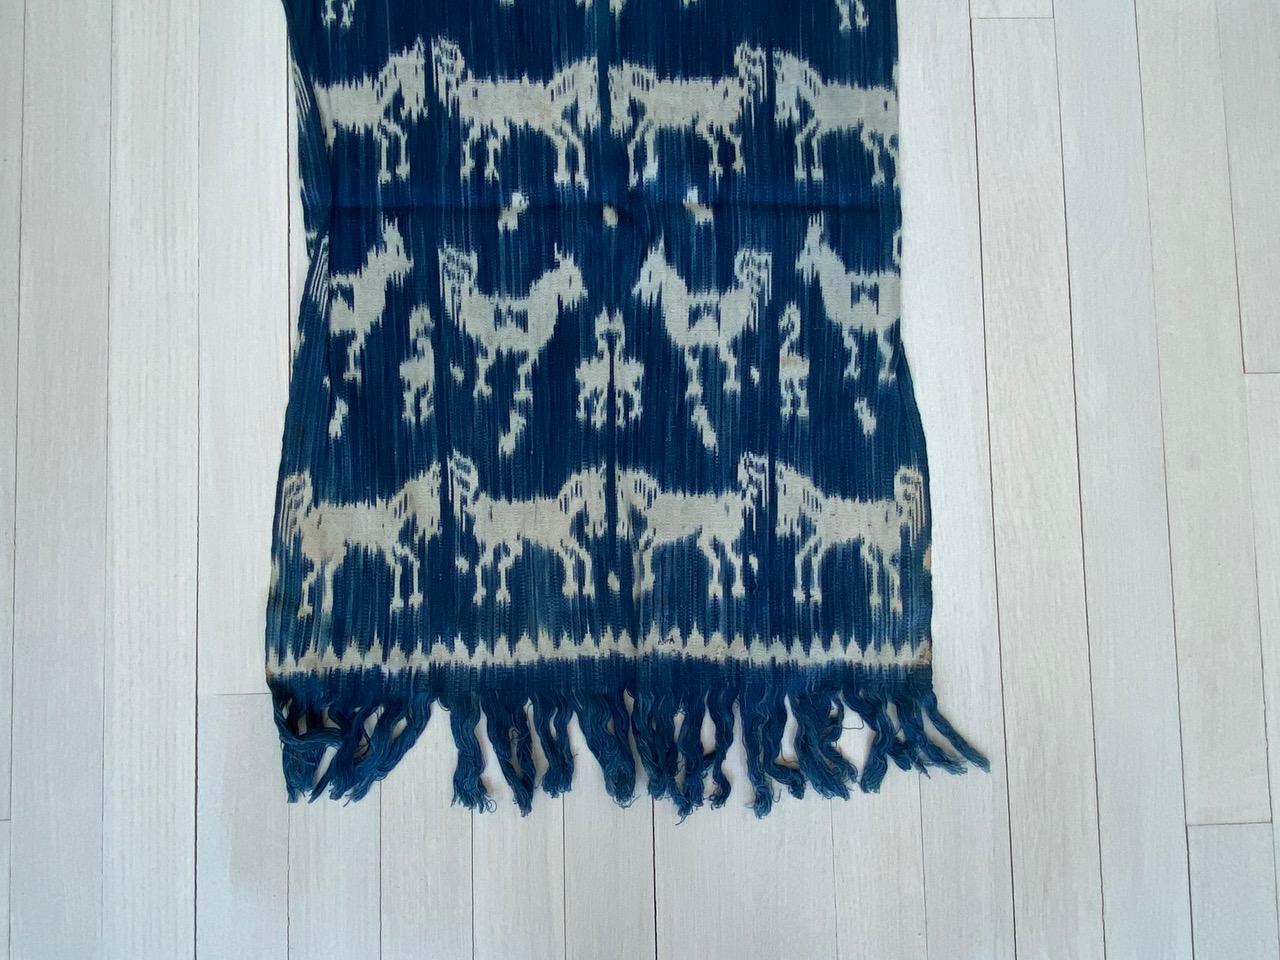 Hand-Woven Andrianna Shamaris Indigo Cotton Sumba Textile For Sale